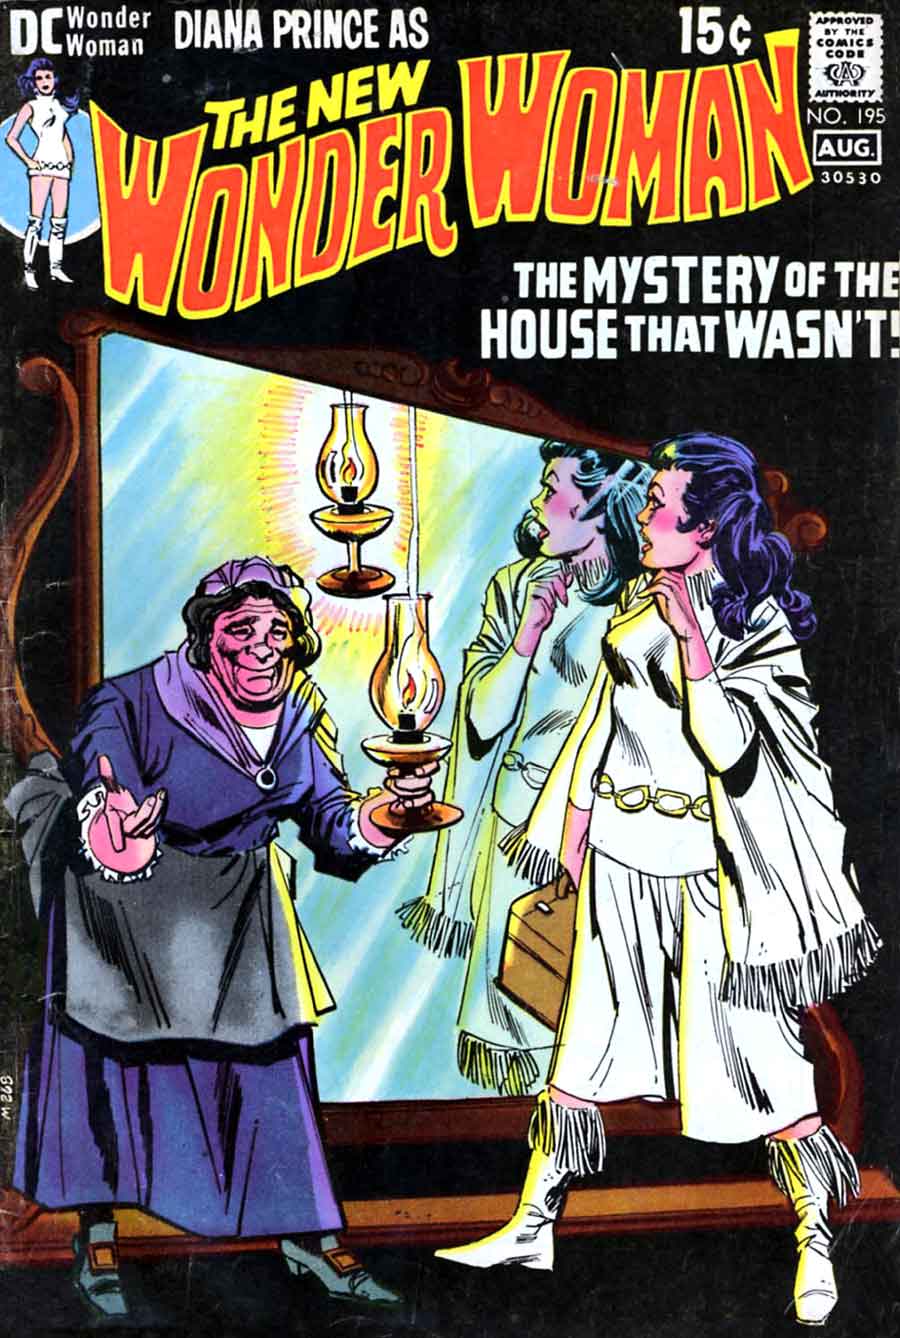 Wonder Woman #195 cover